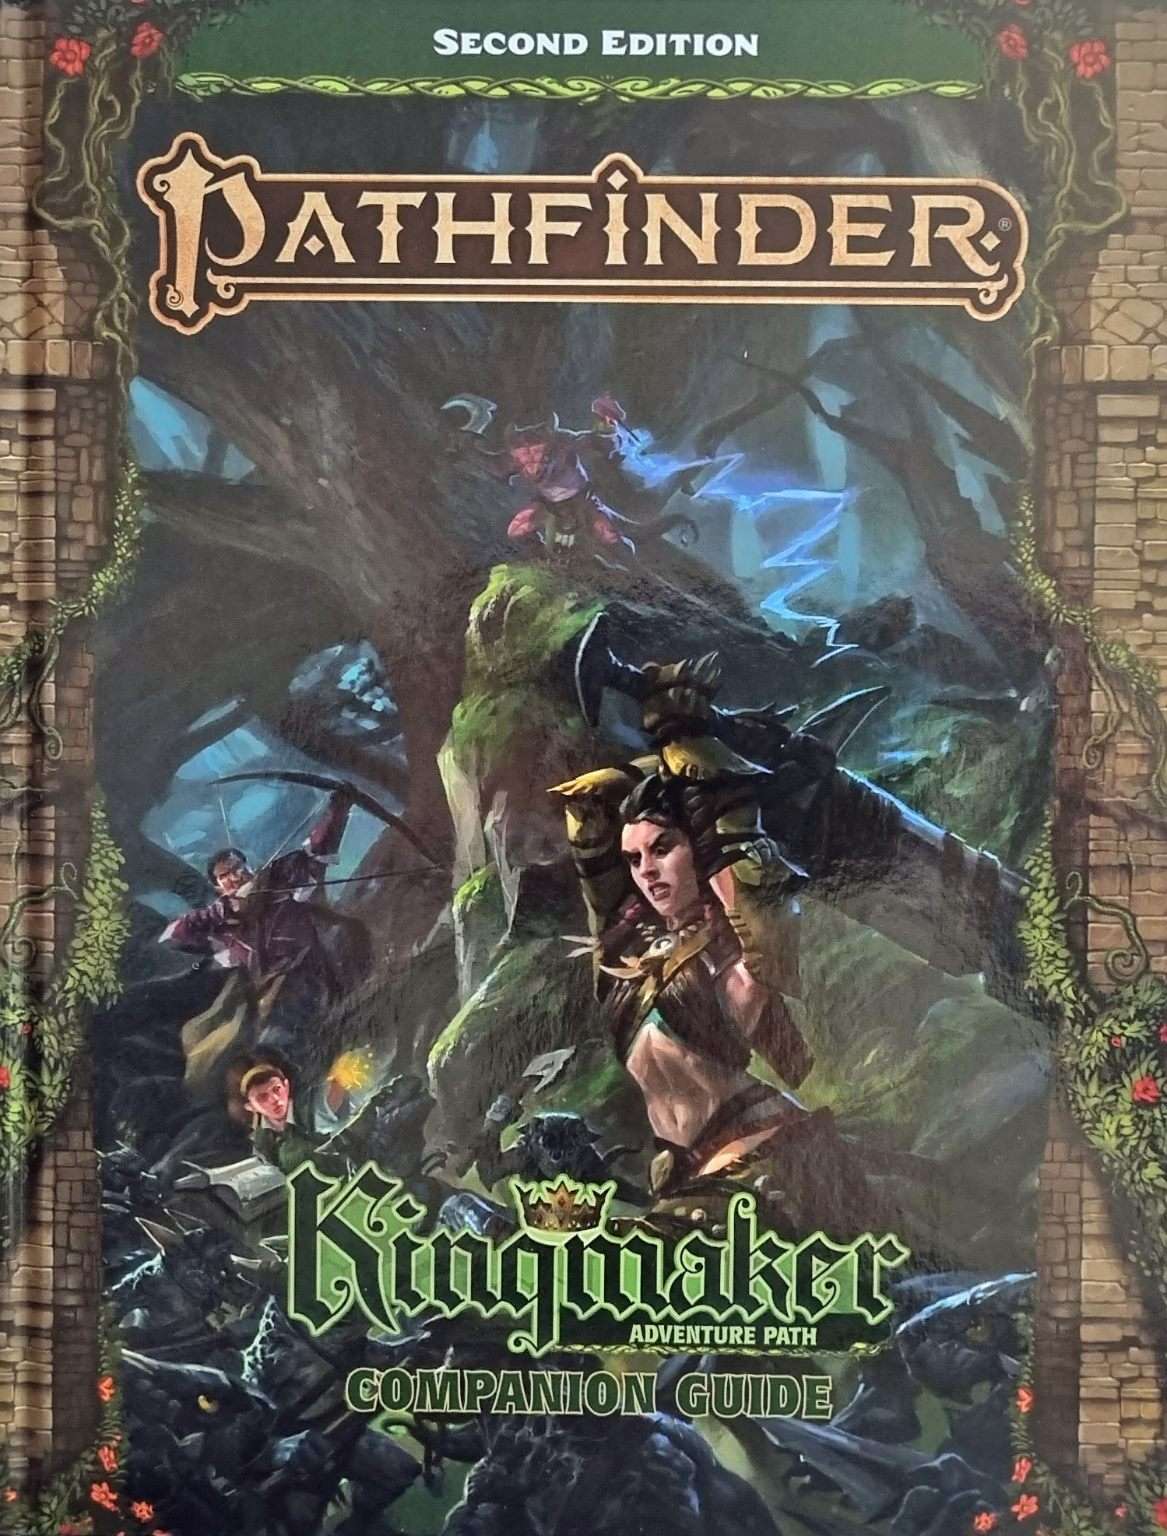 Pathfinder: Kingmaker Adventure Path Companion Guide - Second Edition (2e) Default Title